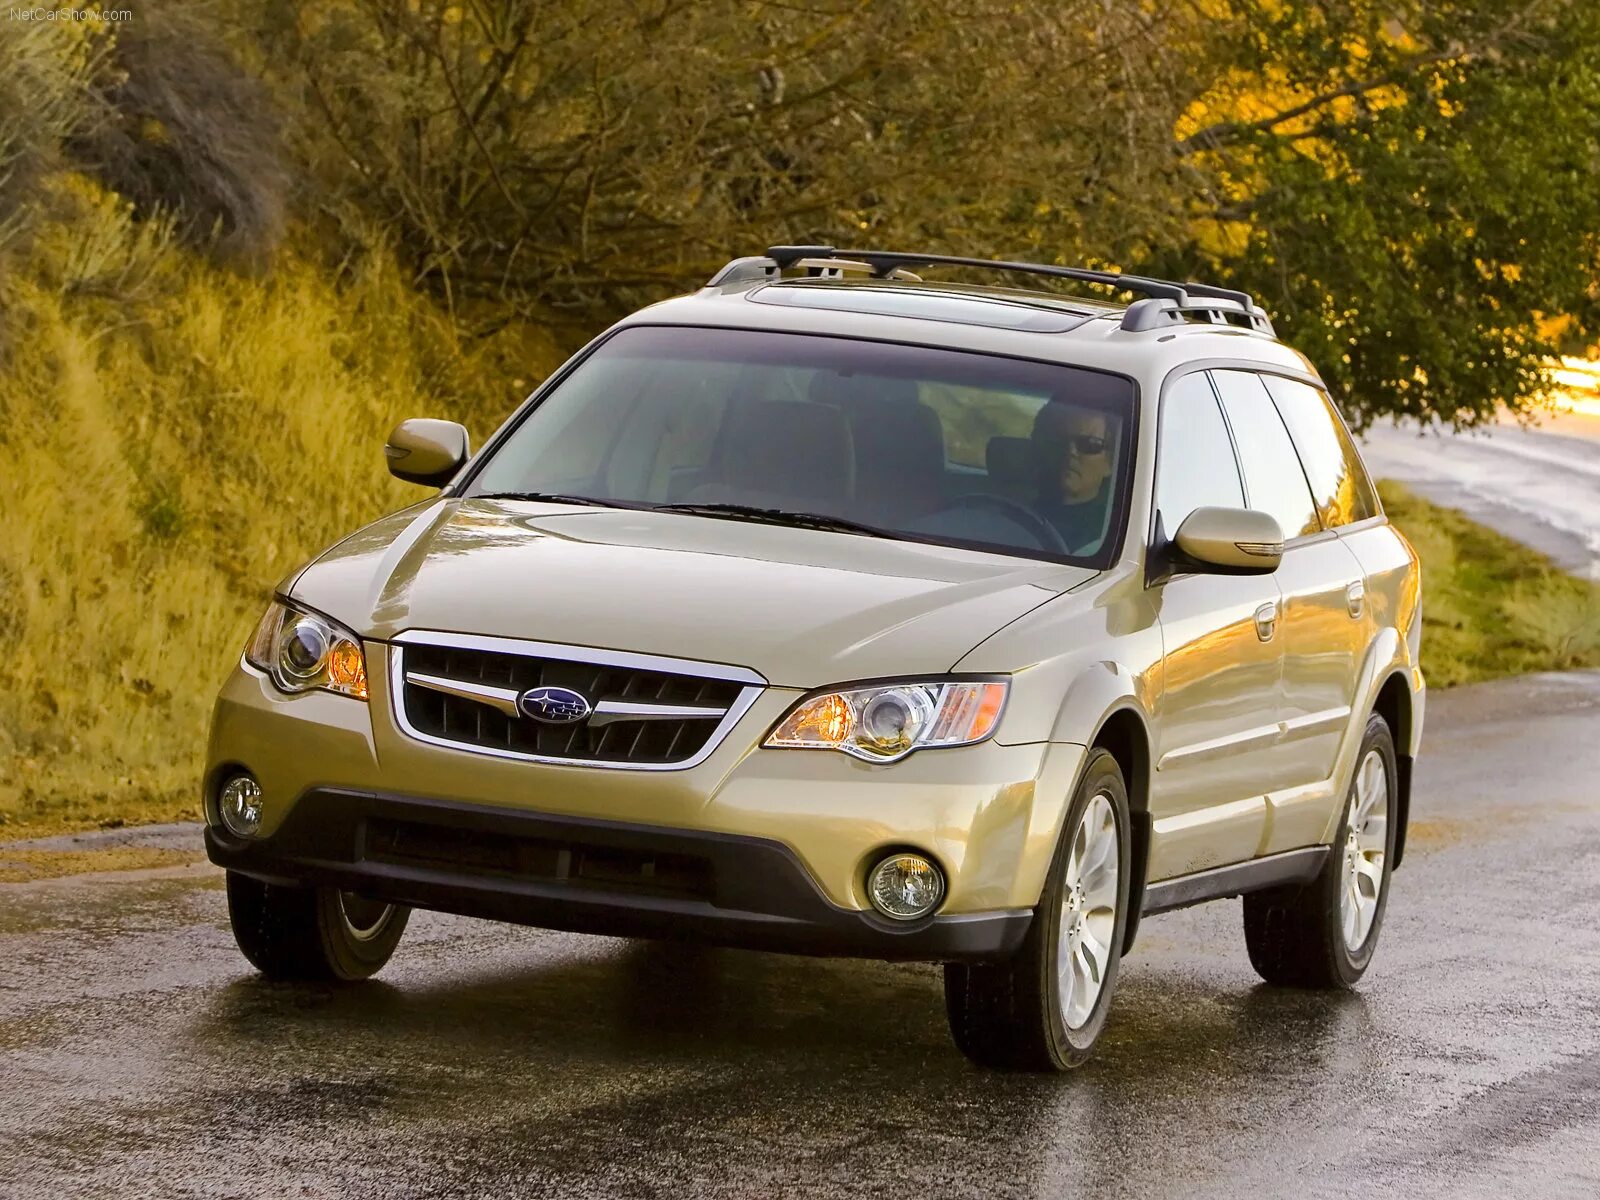 Subaru Legacy Outback. Субару Аутбек 2008. Subaru Legacy Outback 2008. Subaru Legacy Outback 2009. Субару 3 литра